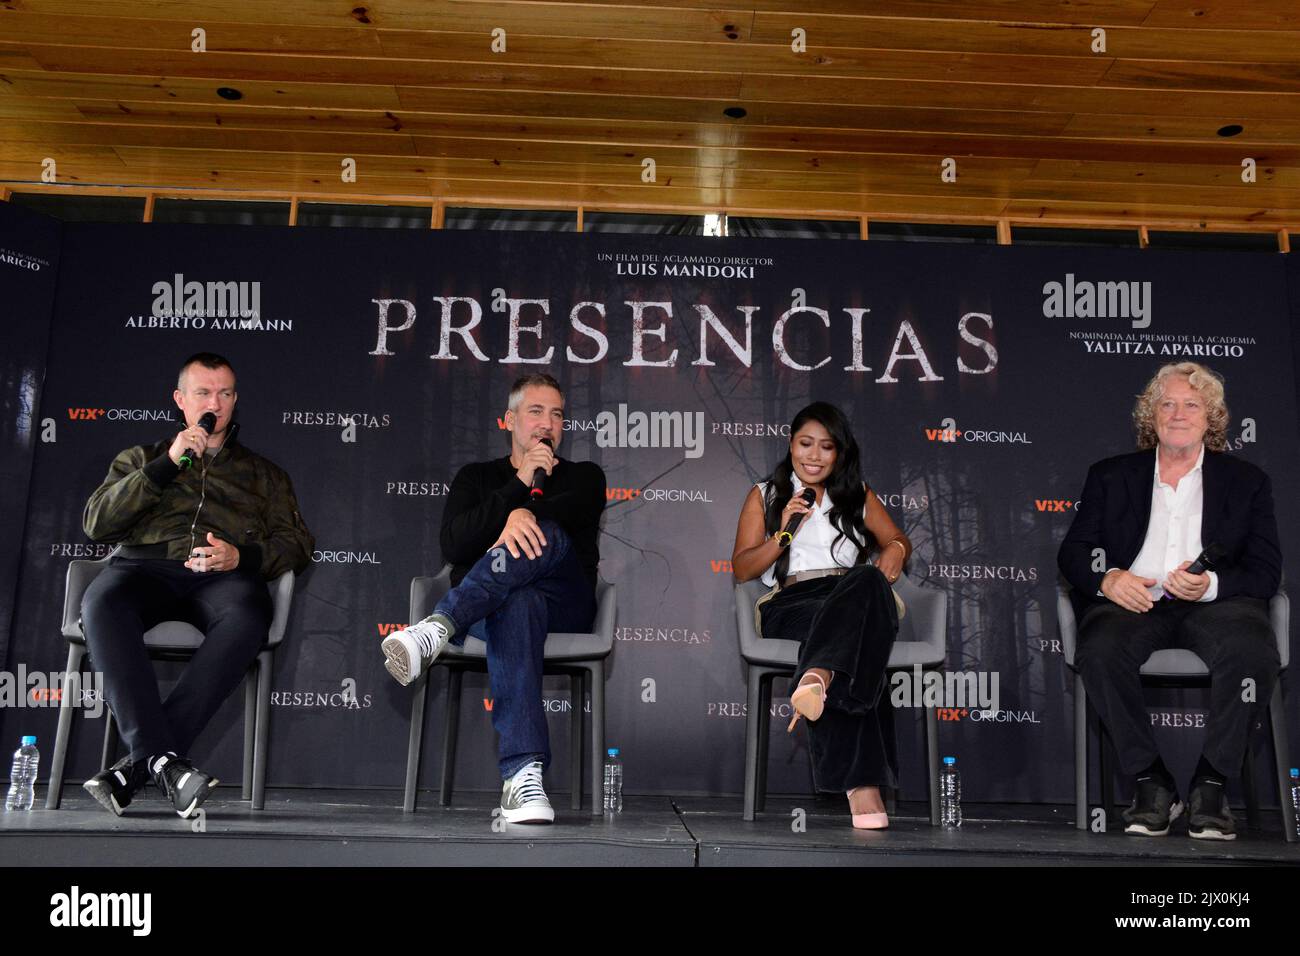 Mexico City, Mexico. 6th Sep, 2022. Philip Lozano, Alberto Ammann, Yalitza  Aparicio, Luis Mandoki attend at a press conference to promote the film  ˜Presencias' at Cineteca Nacional. on September 6, 2022 in